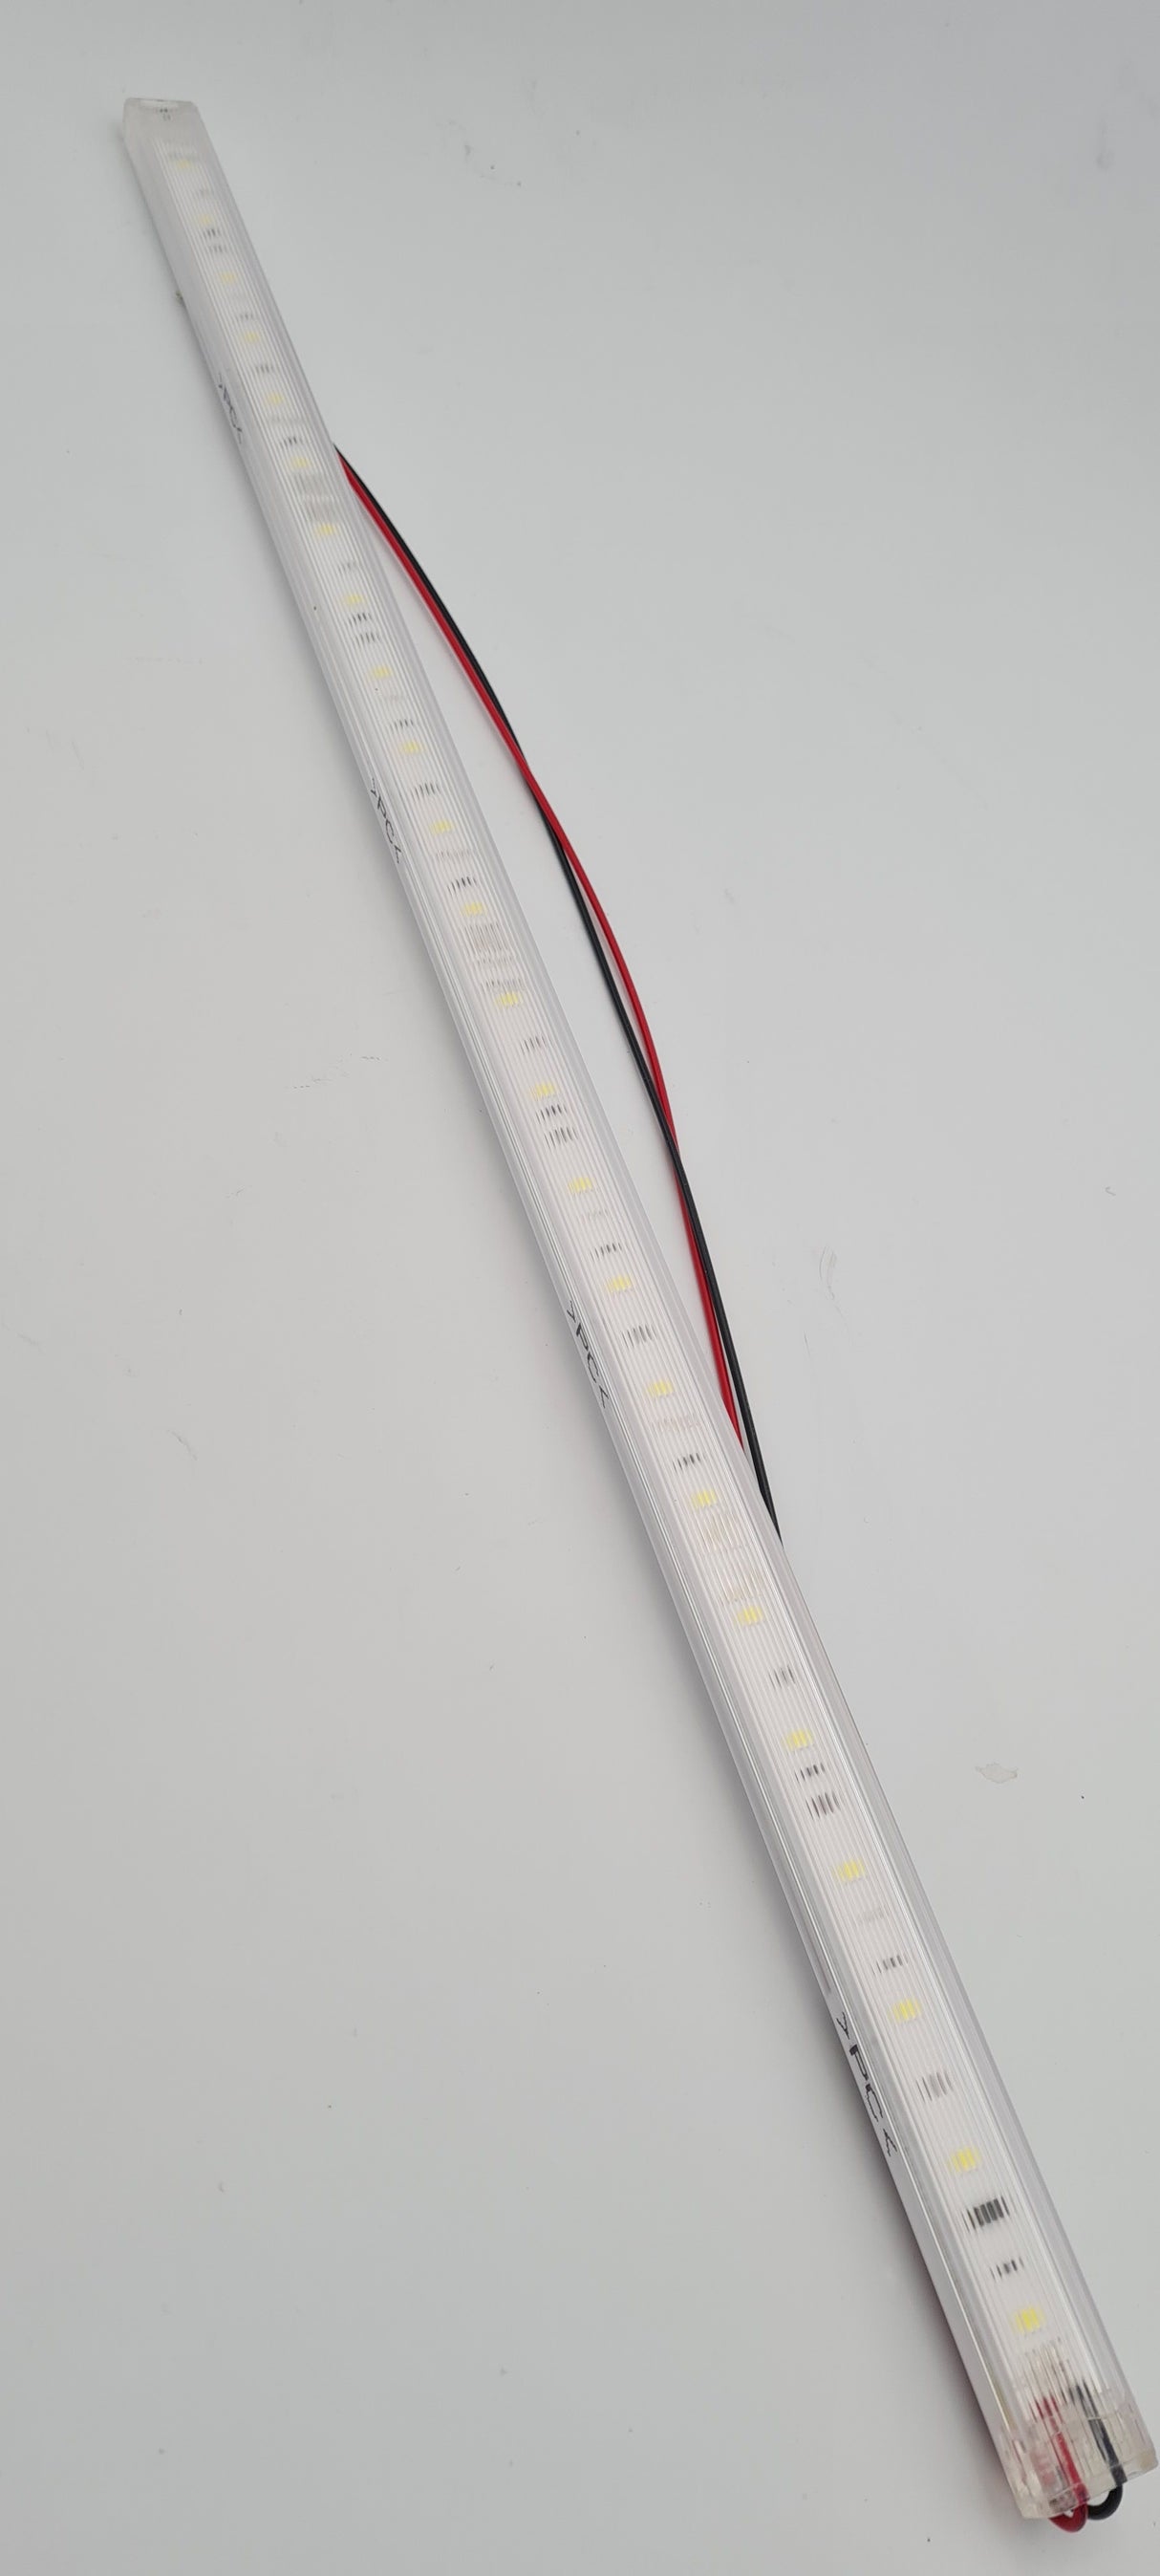 LABCRAFT LED Strip Light - 12V - 522mm - White - LC120 - COLLECTION ONLY